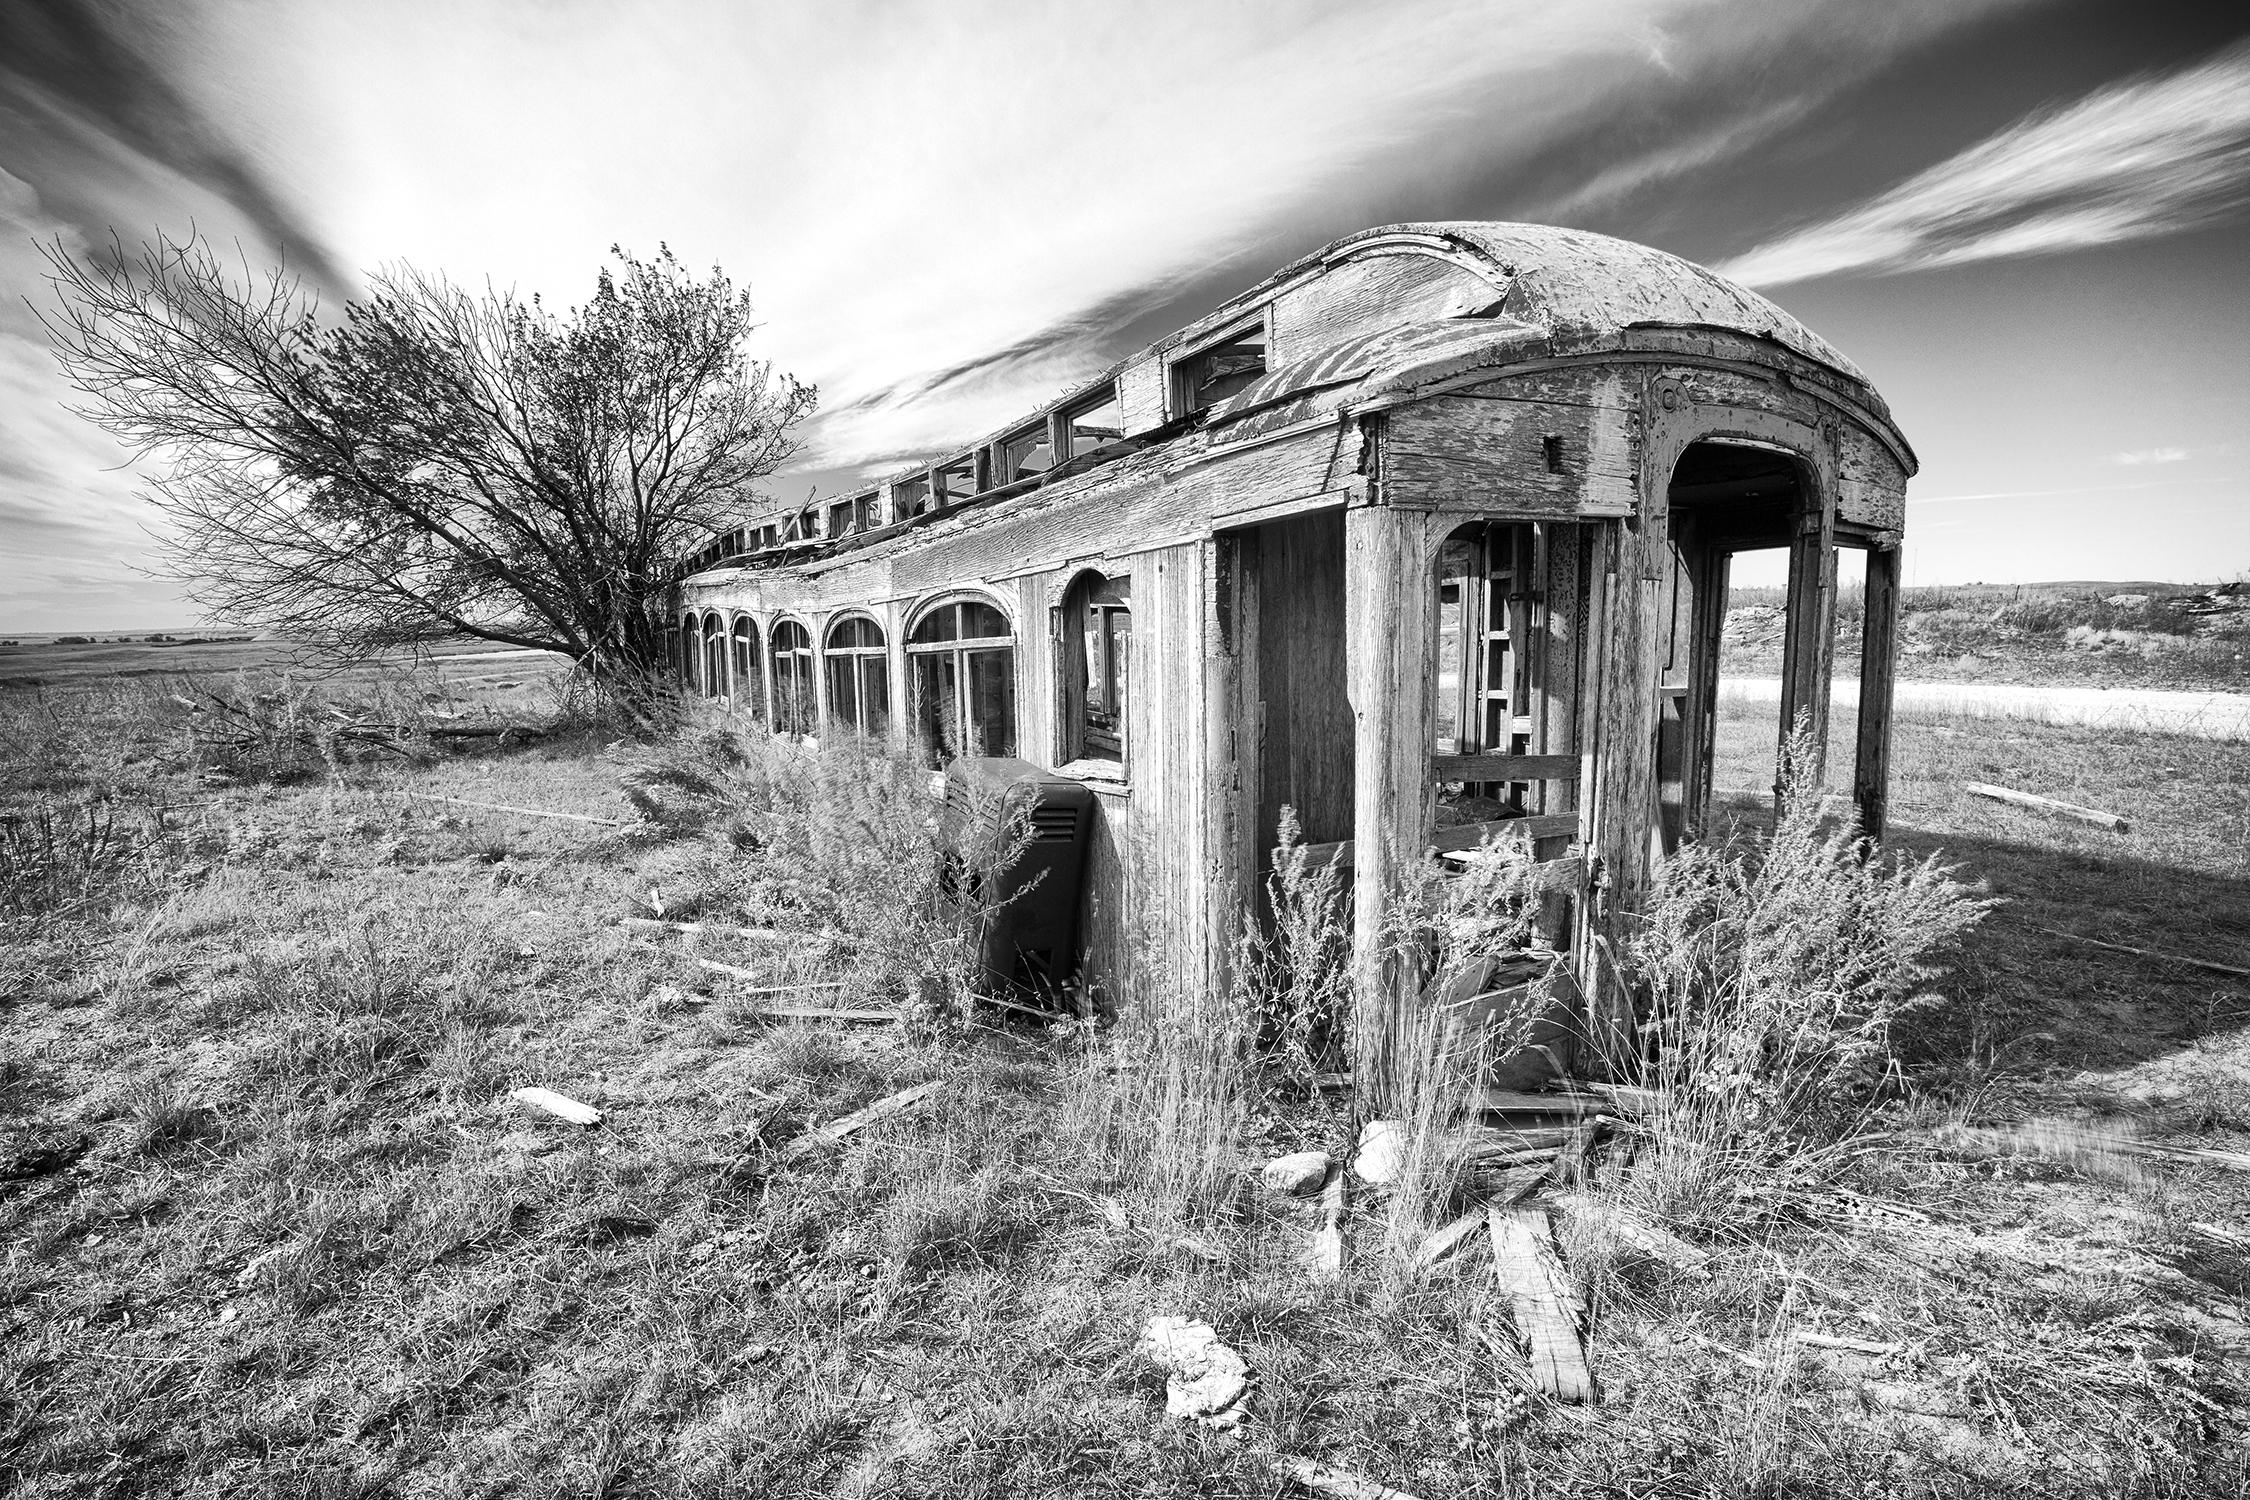 Rebecca Skinner Black and White Photograph - "Great Northern Railcar", contemporary, landscape, North Dakota, photograph